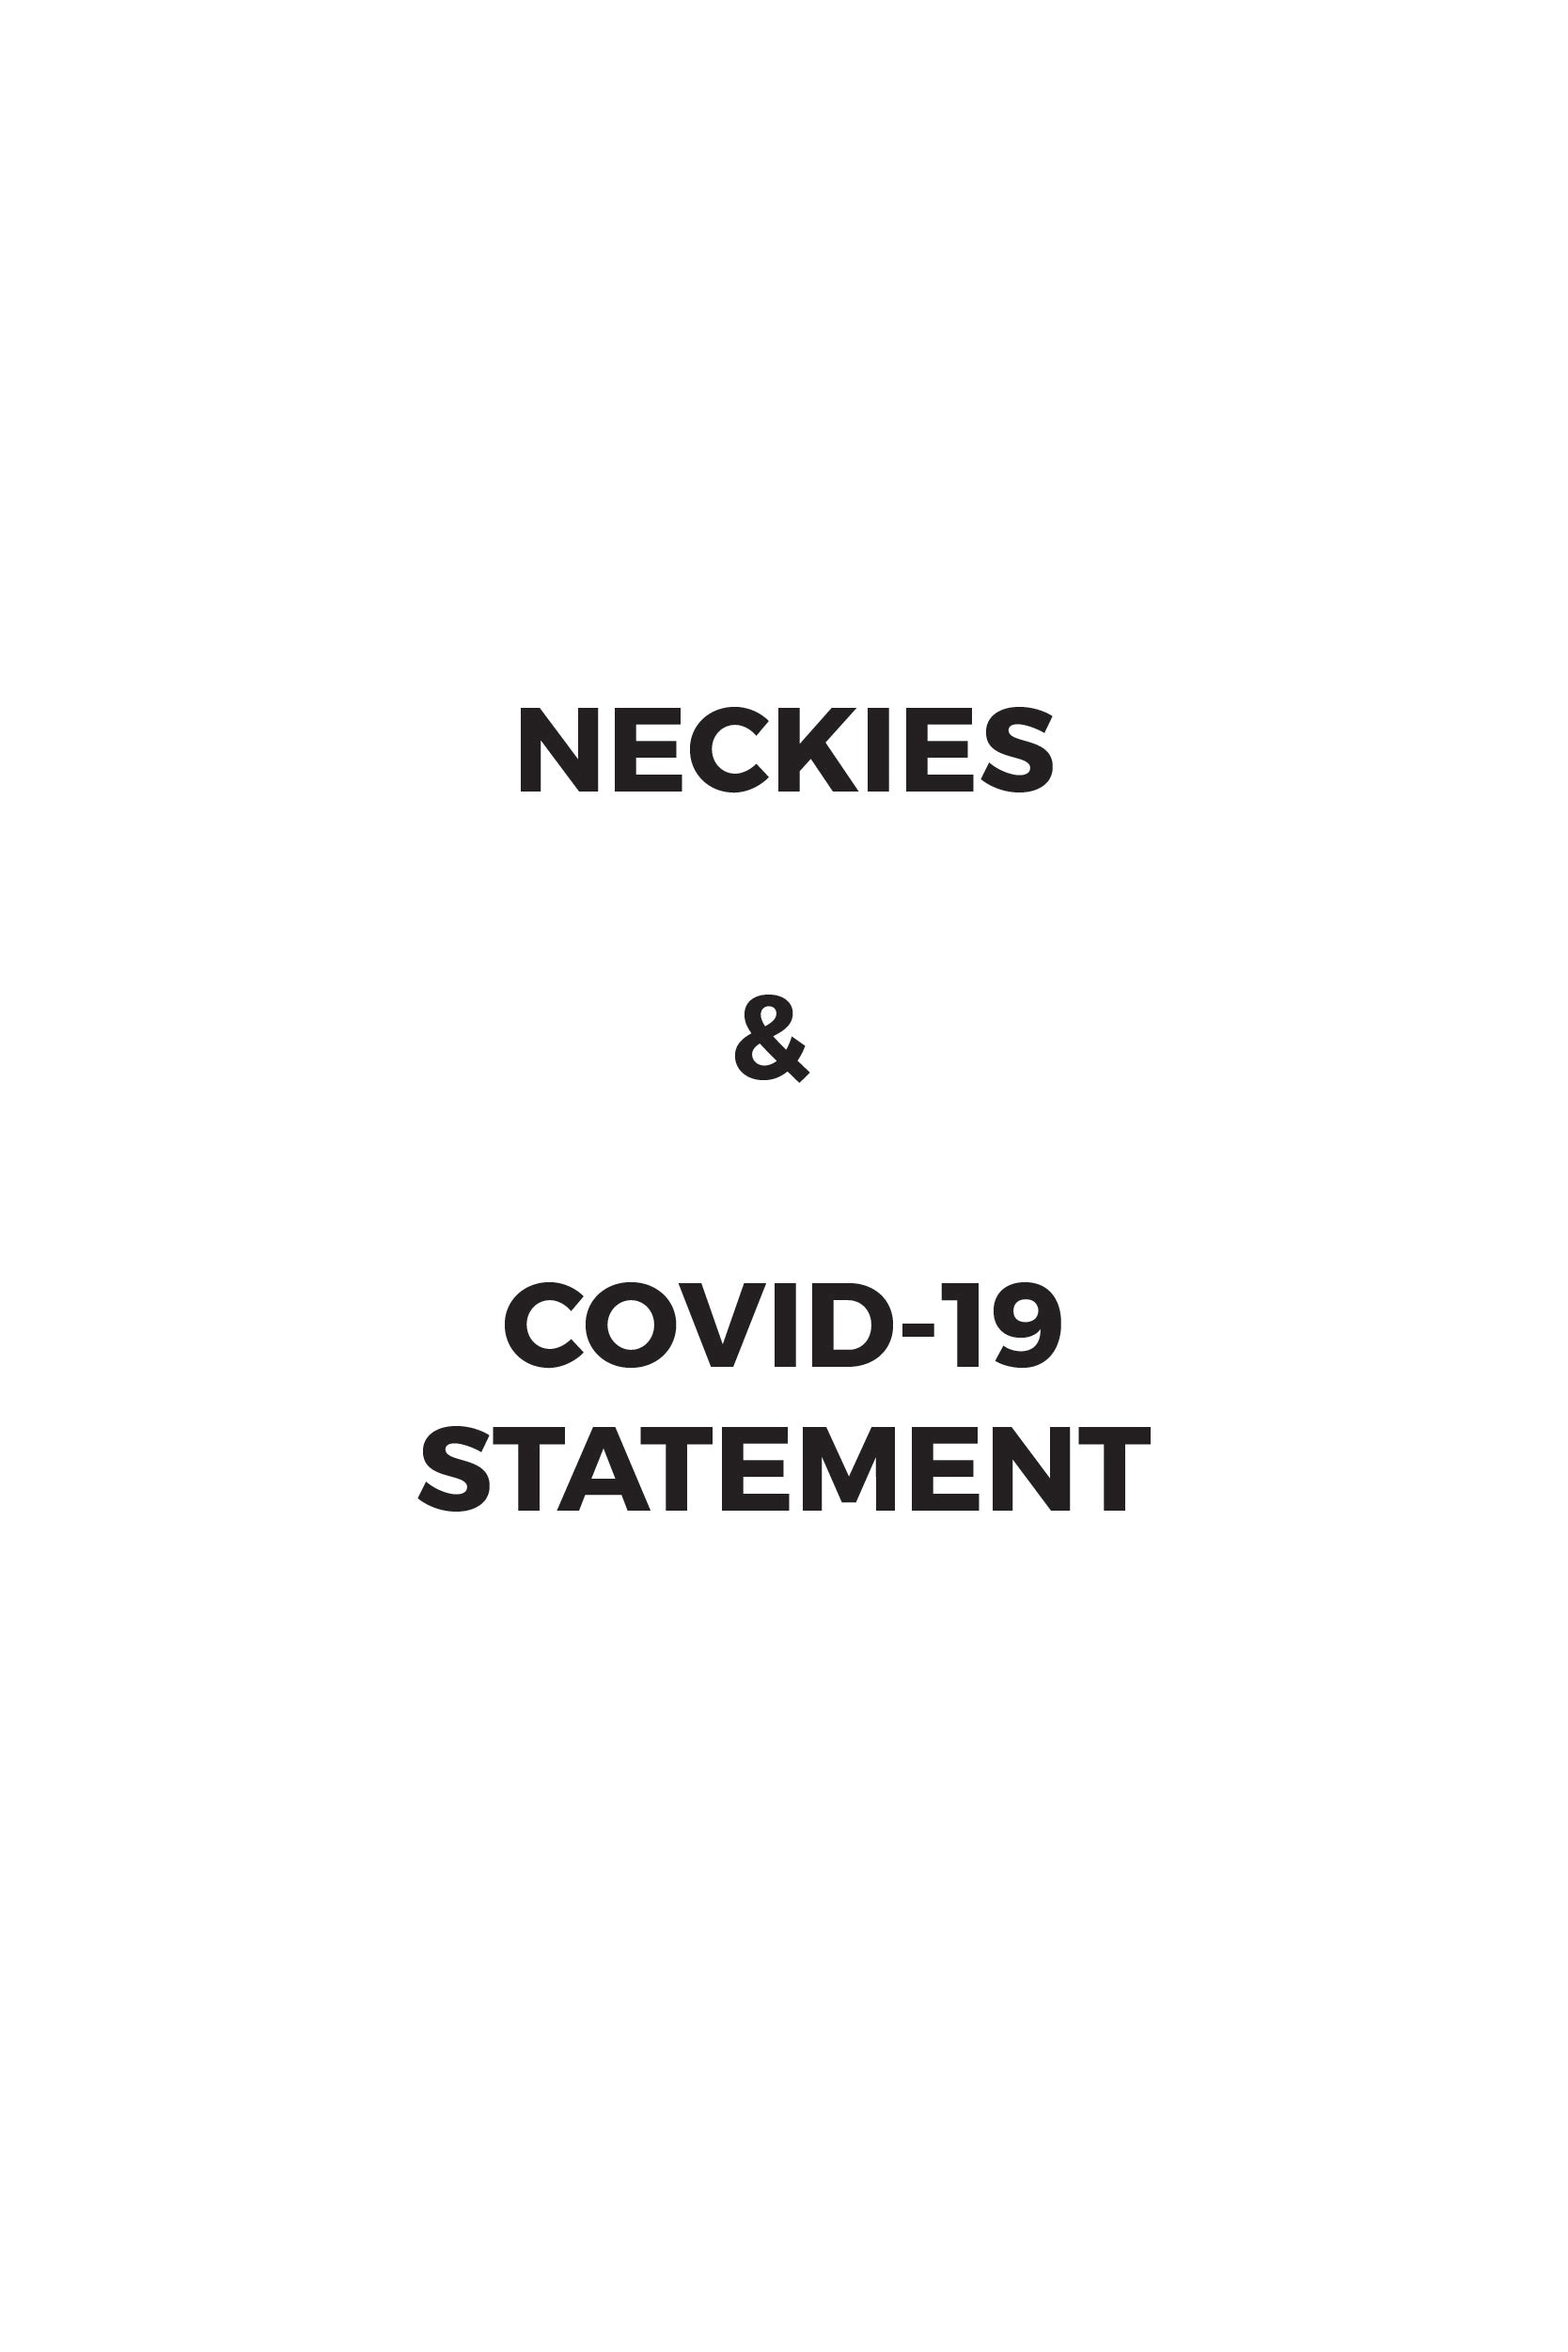 Neckies & Covid-19 Statement